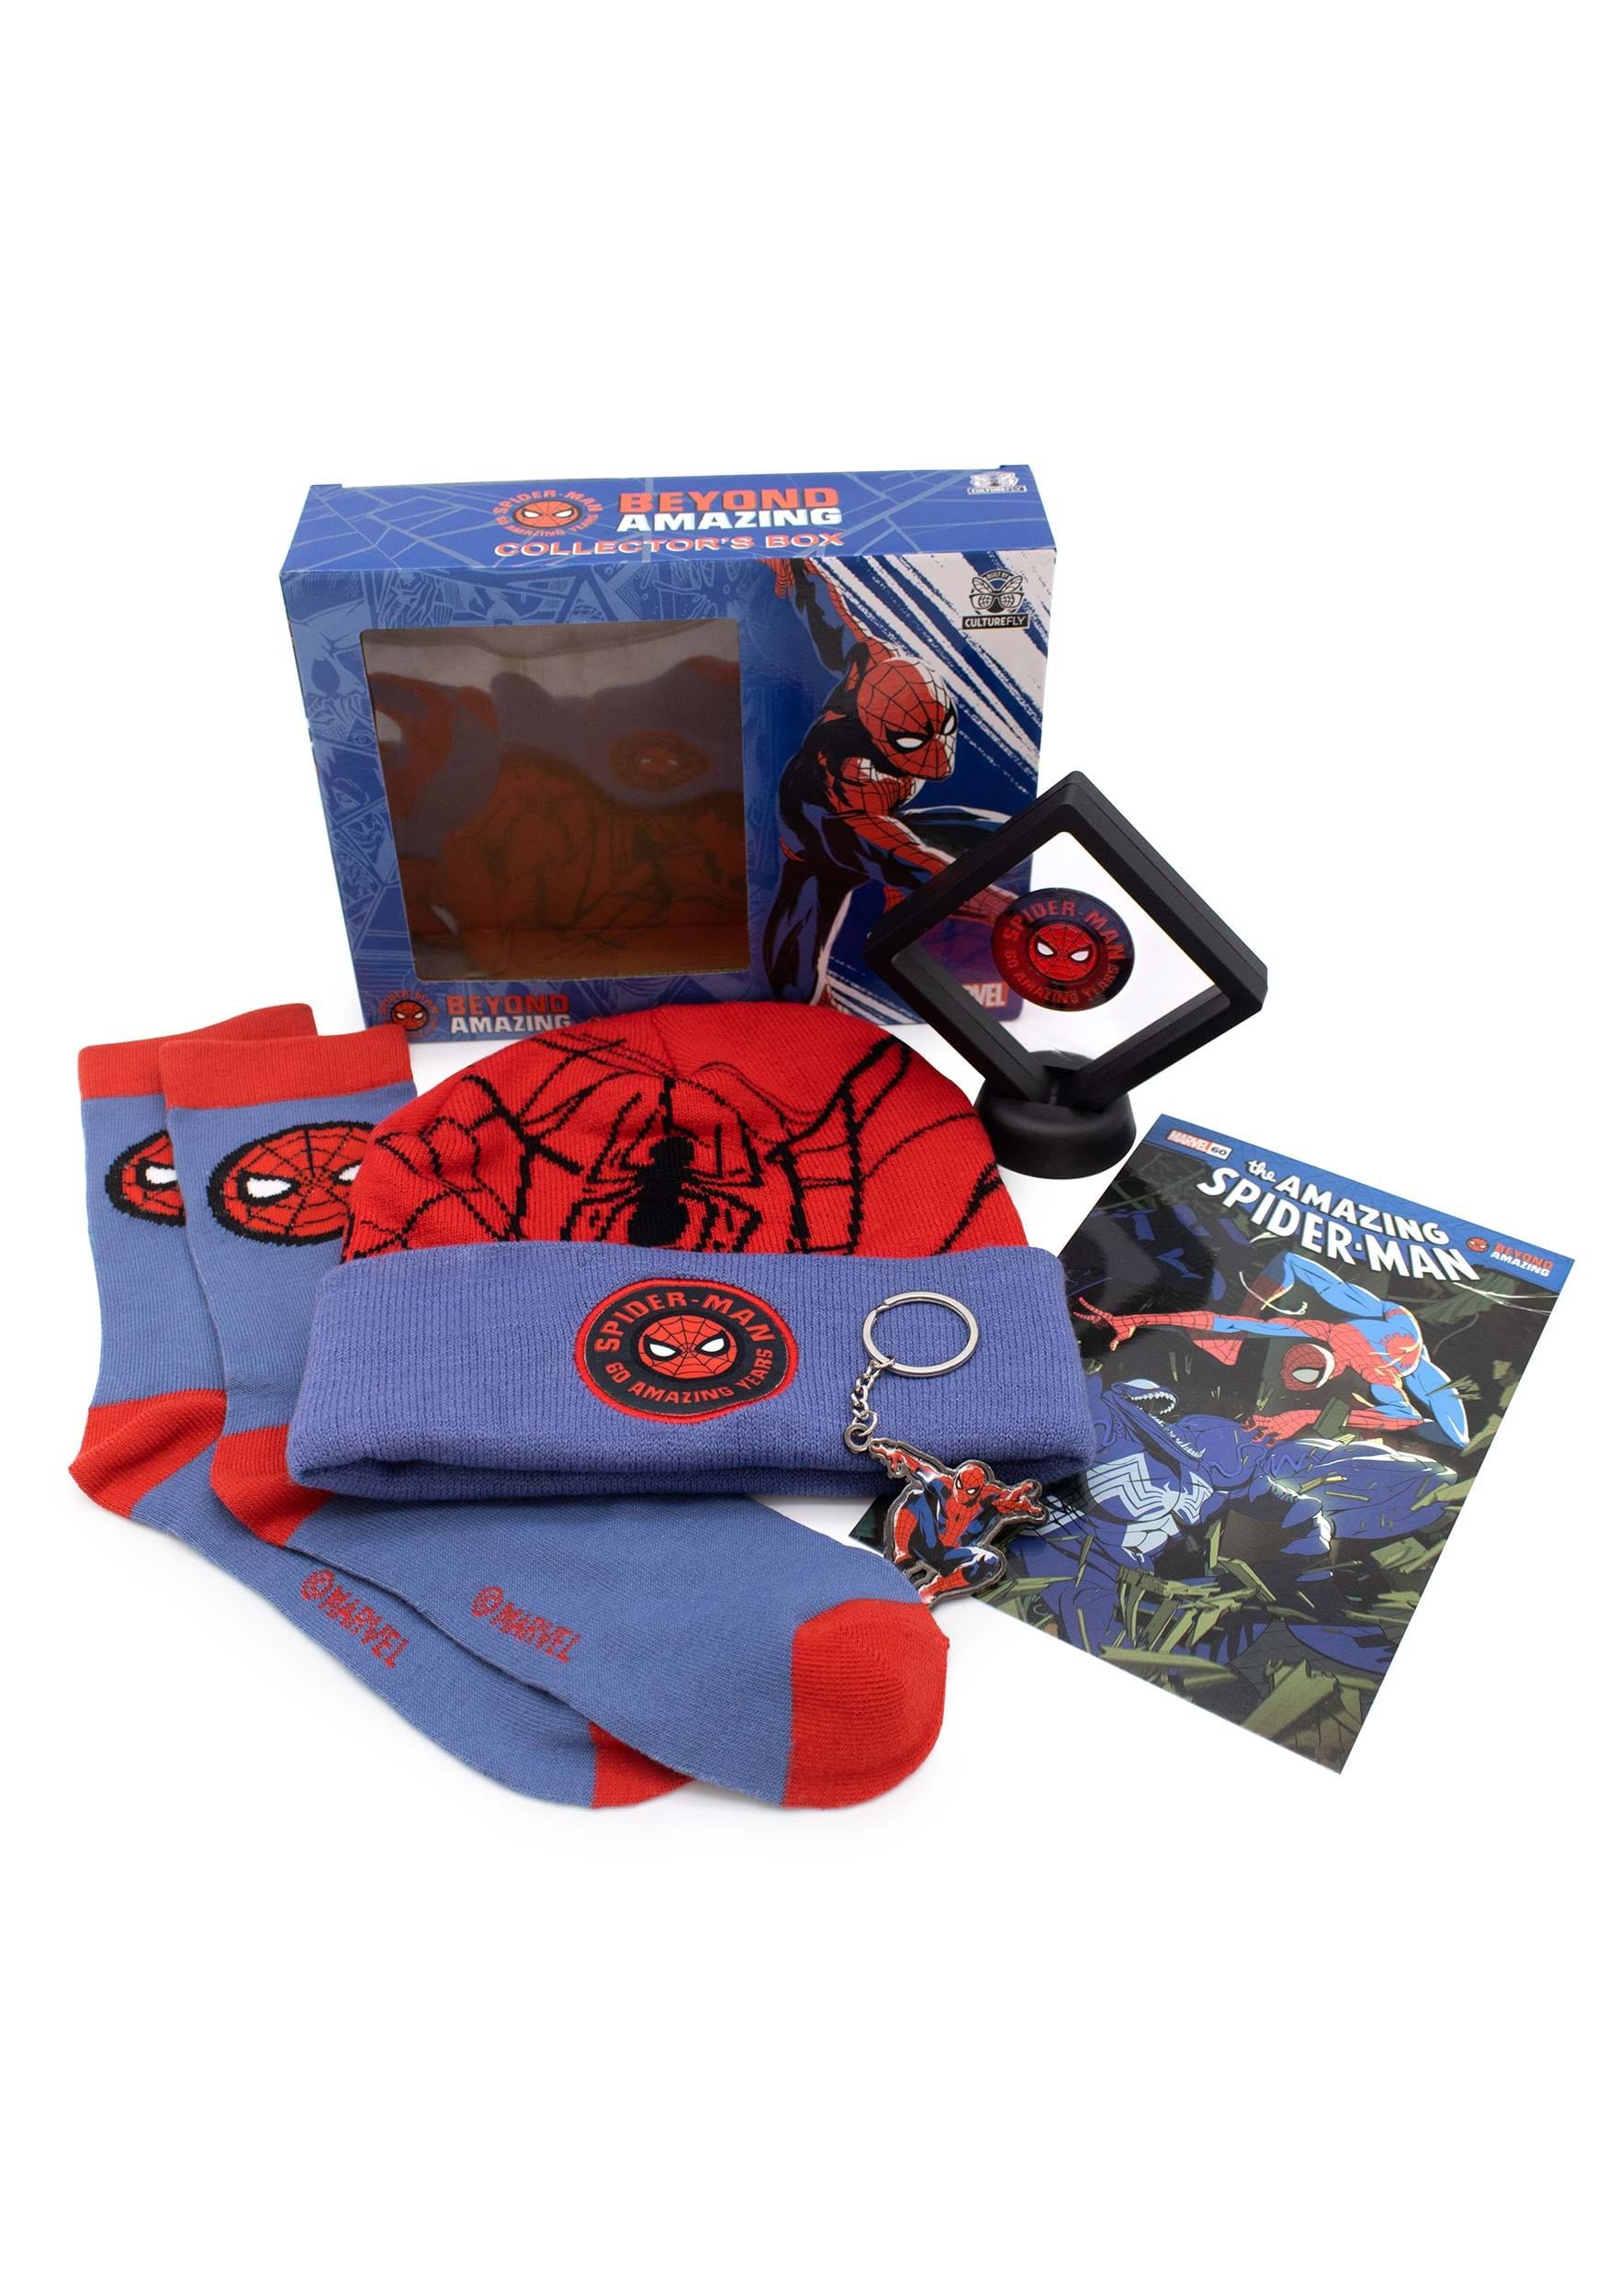 Spiderman Collectors Box